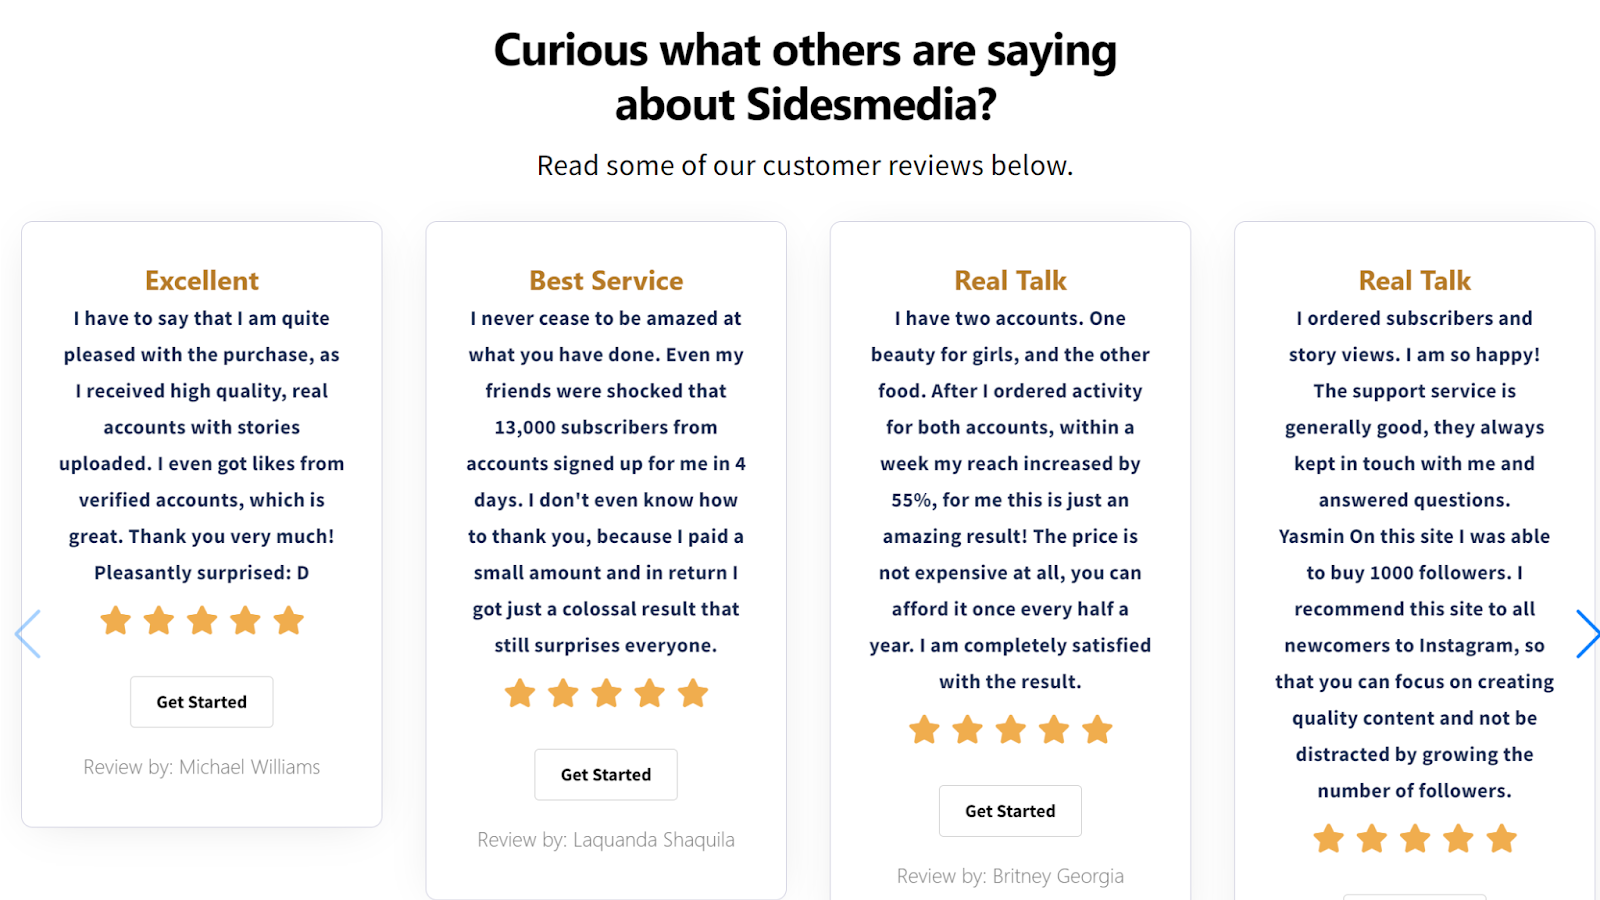 Customer testimonials on Sidesmedia, showing mixed feedback.